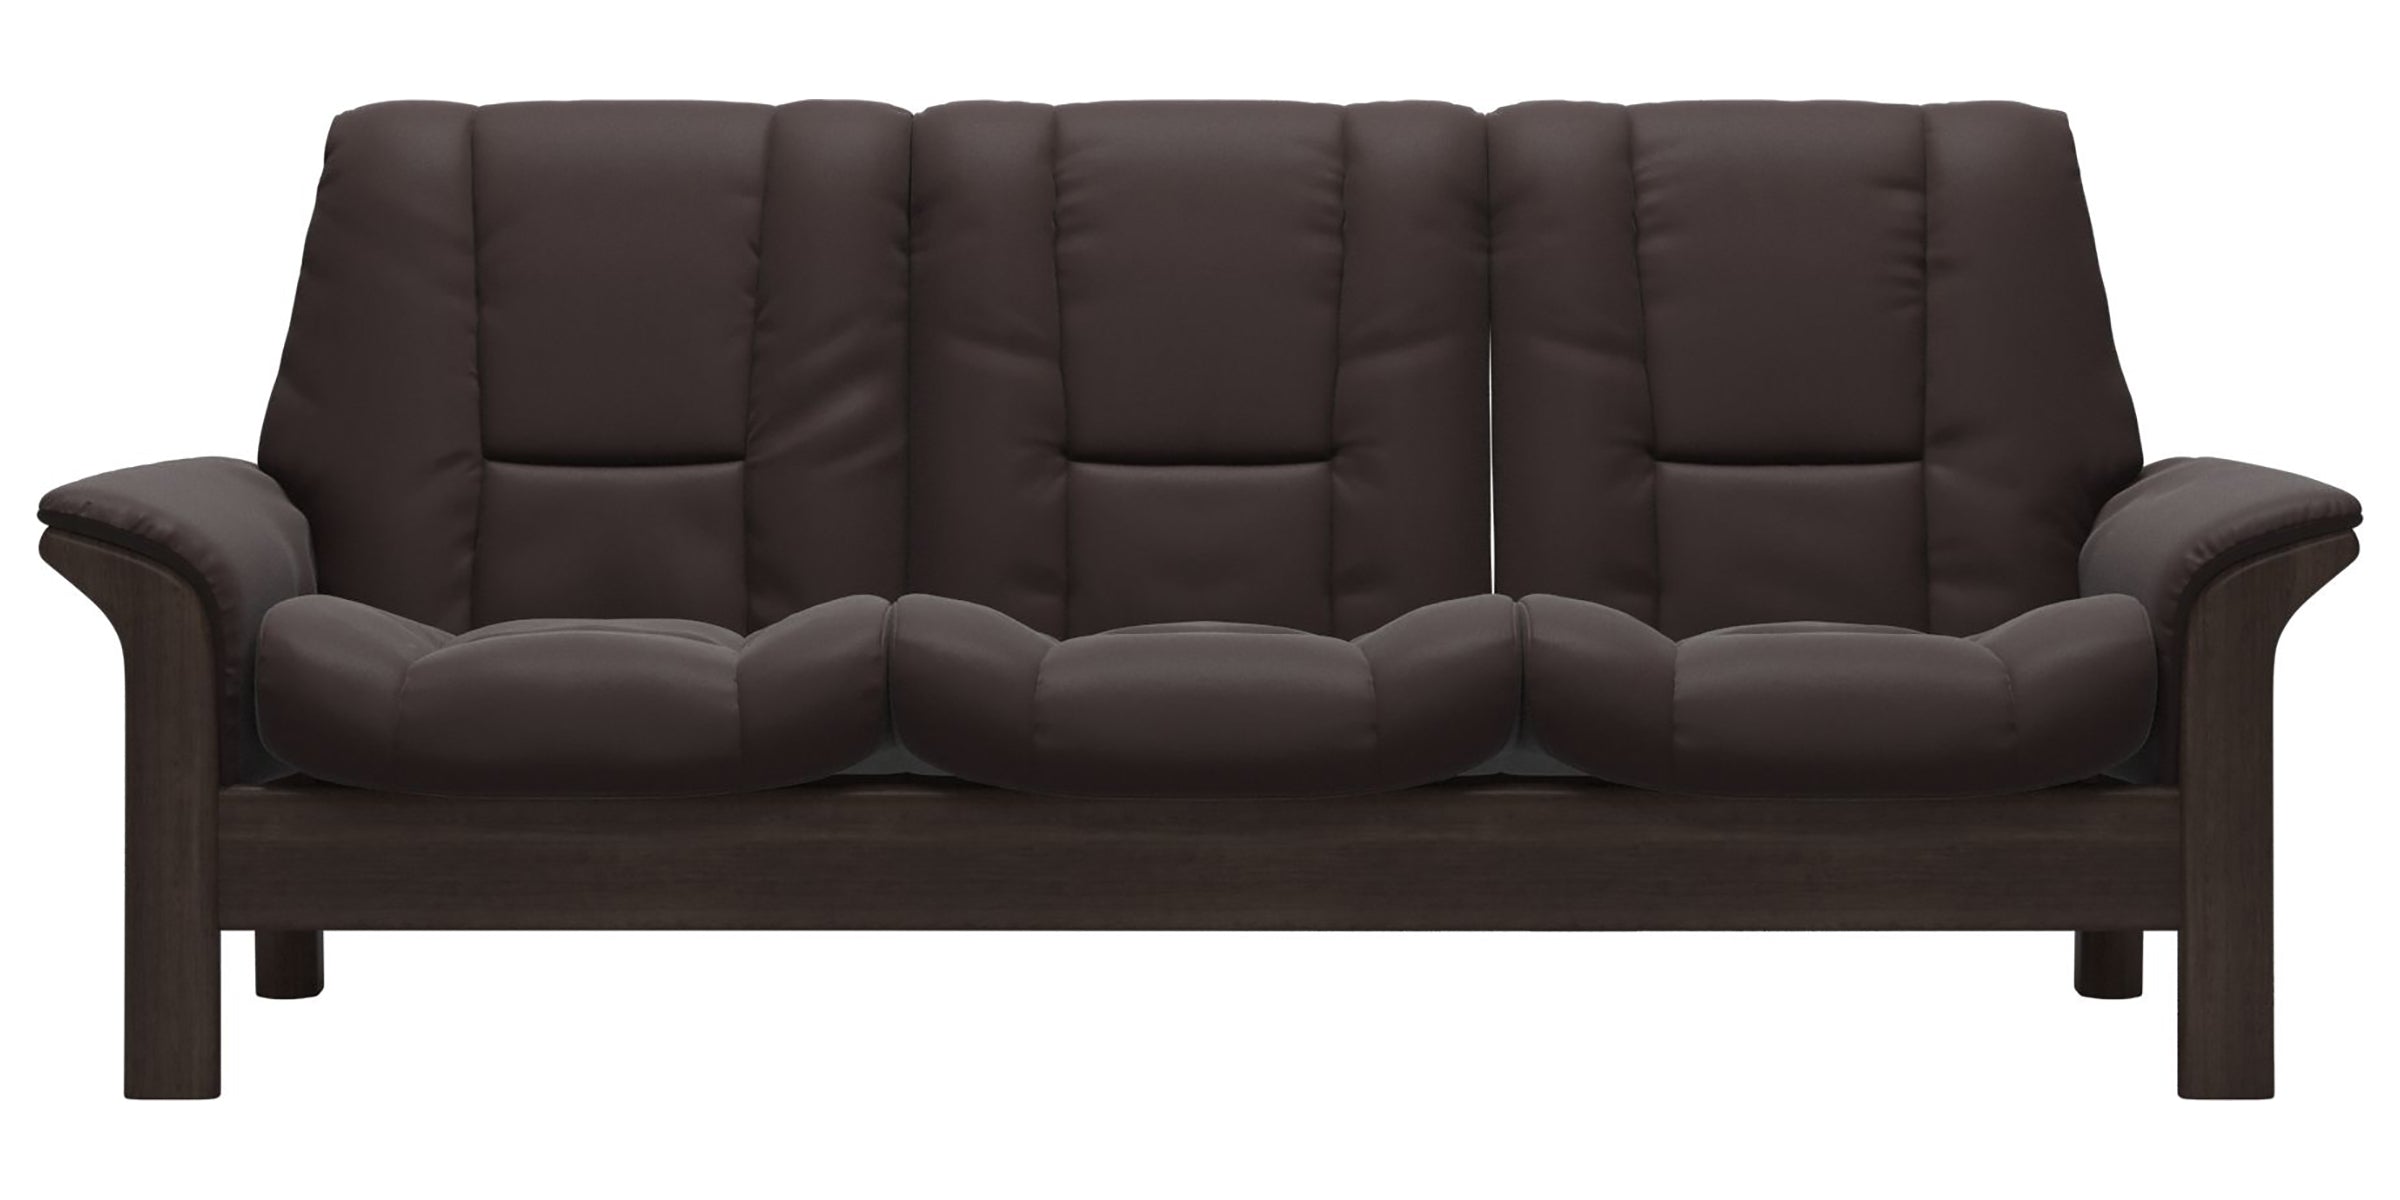 Paloma Leather Chocolate and Wenge Base | Stressless Windsor 3-Seater Low Back Sofa | Valley Ridge Furniture